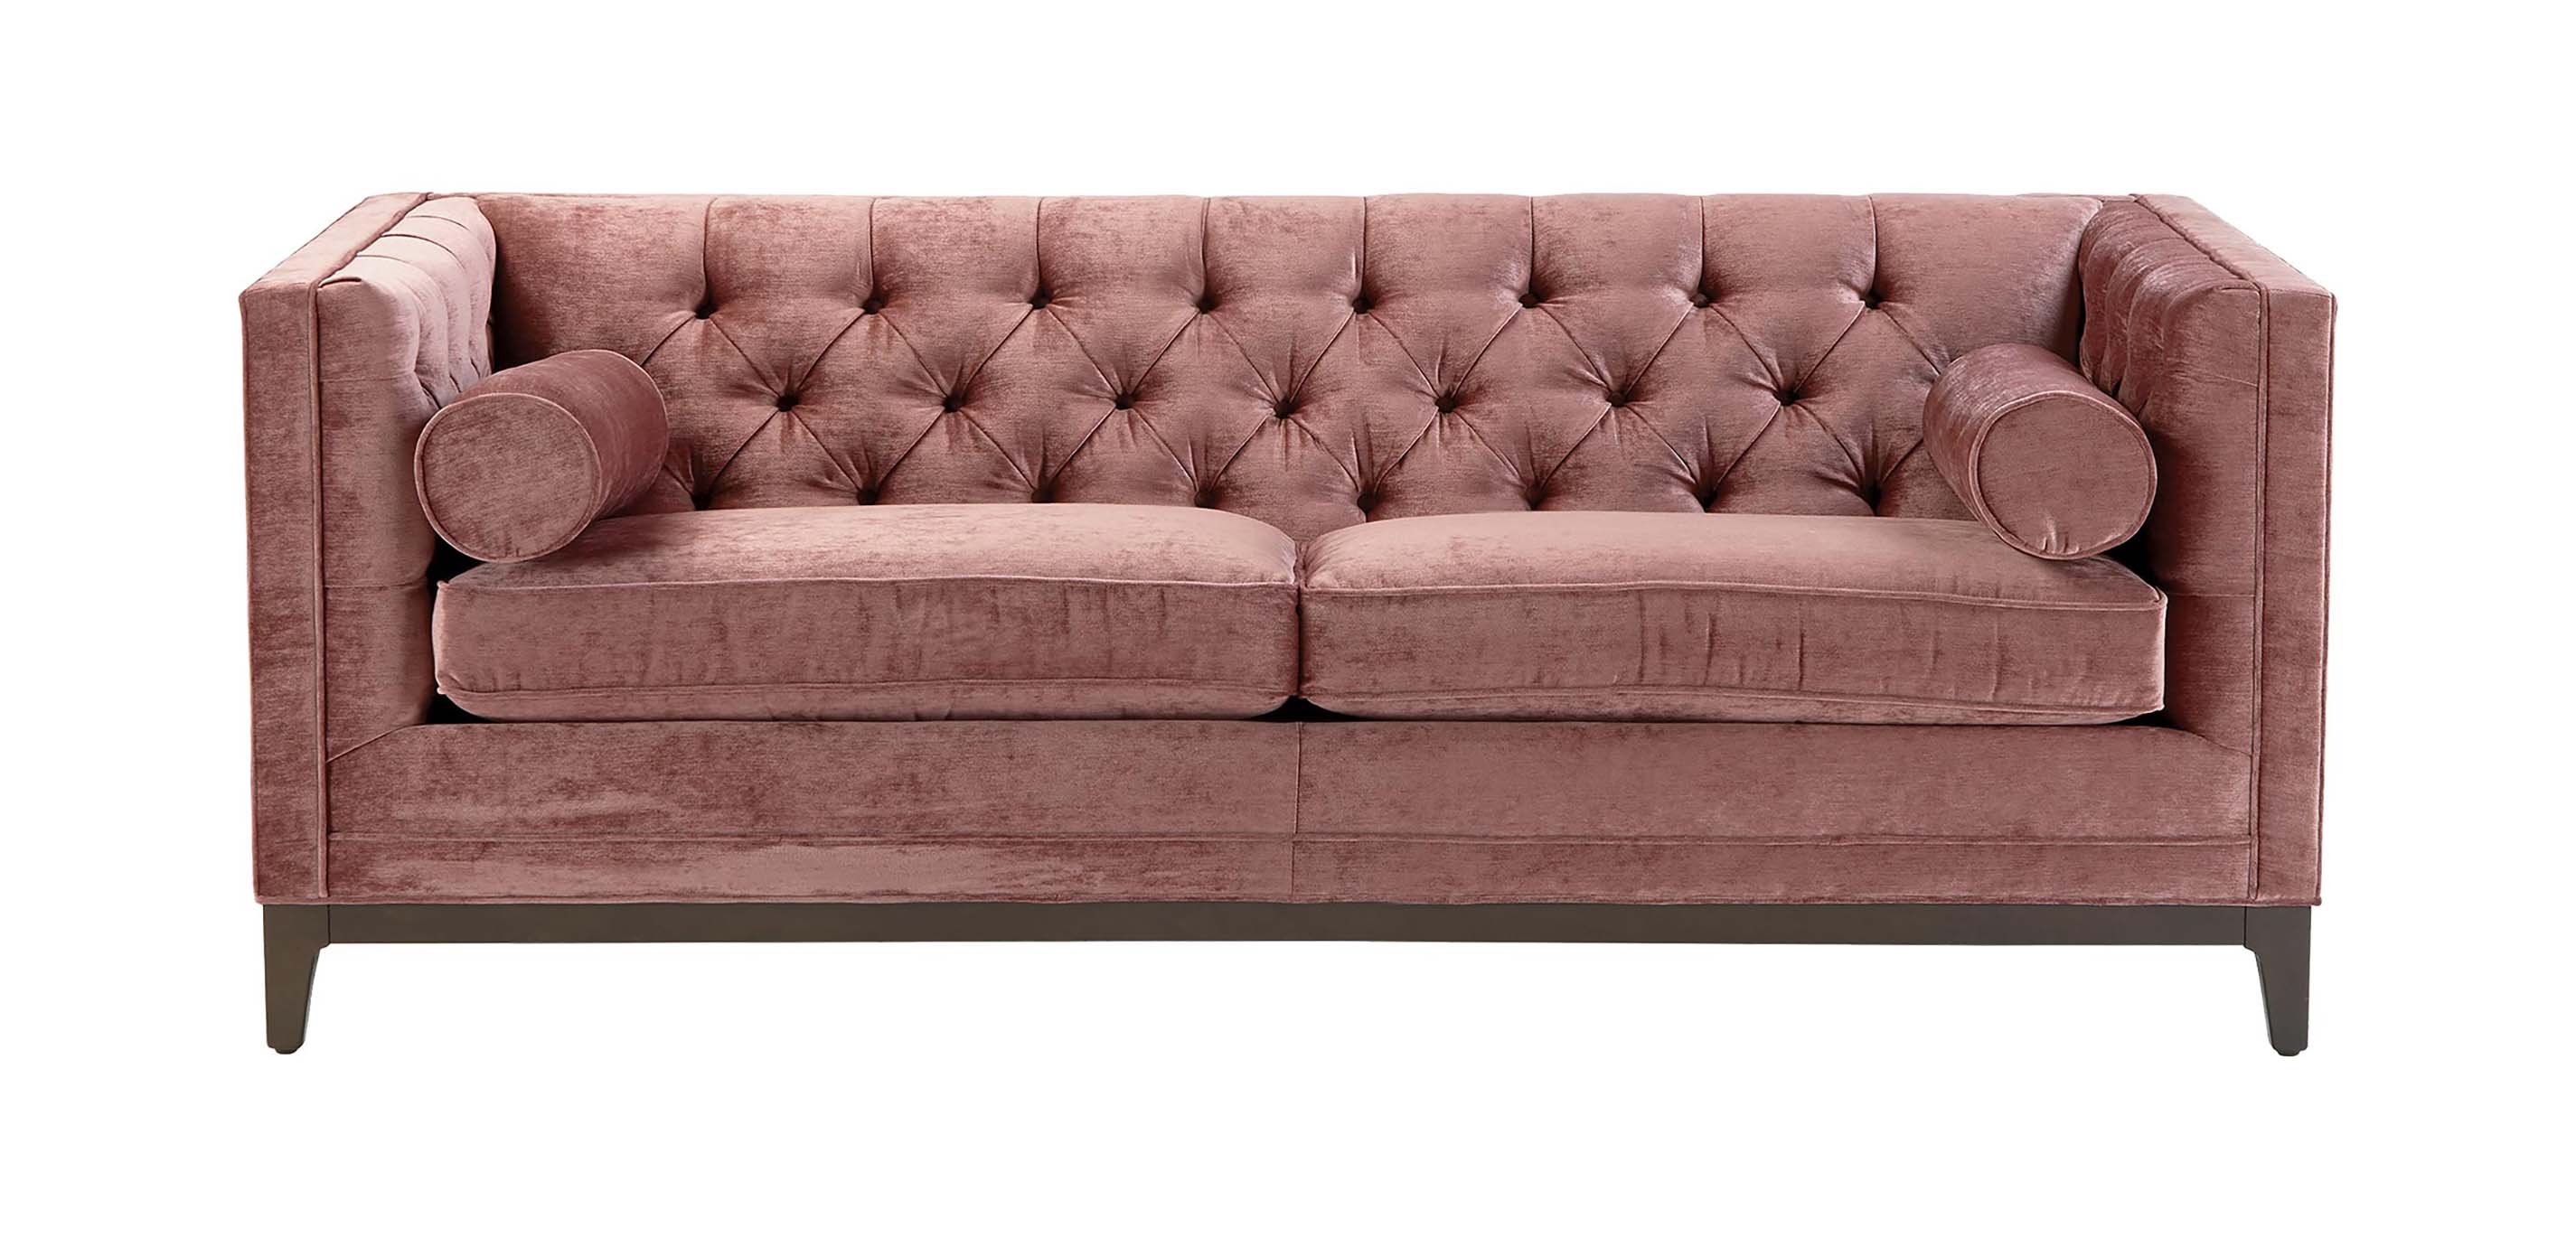 ethan allen sofa bed replacemeny mattress